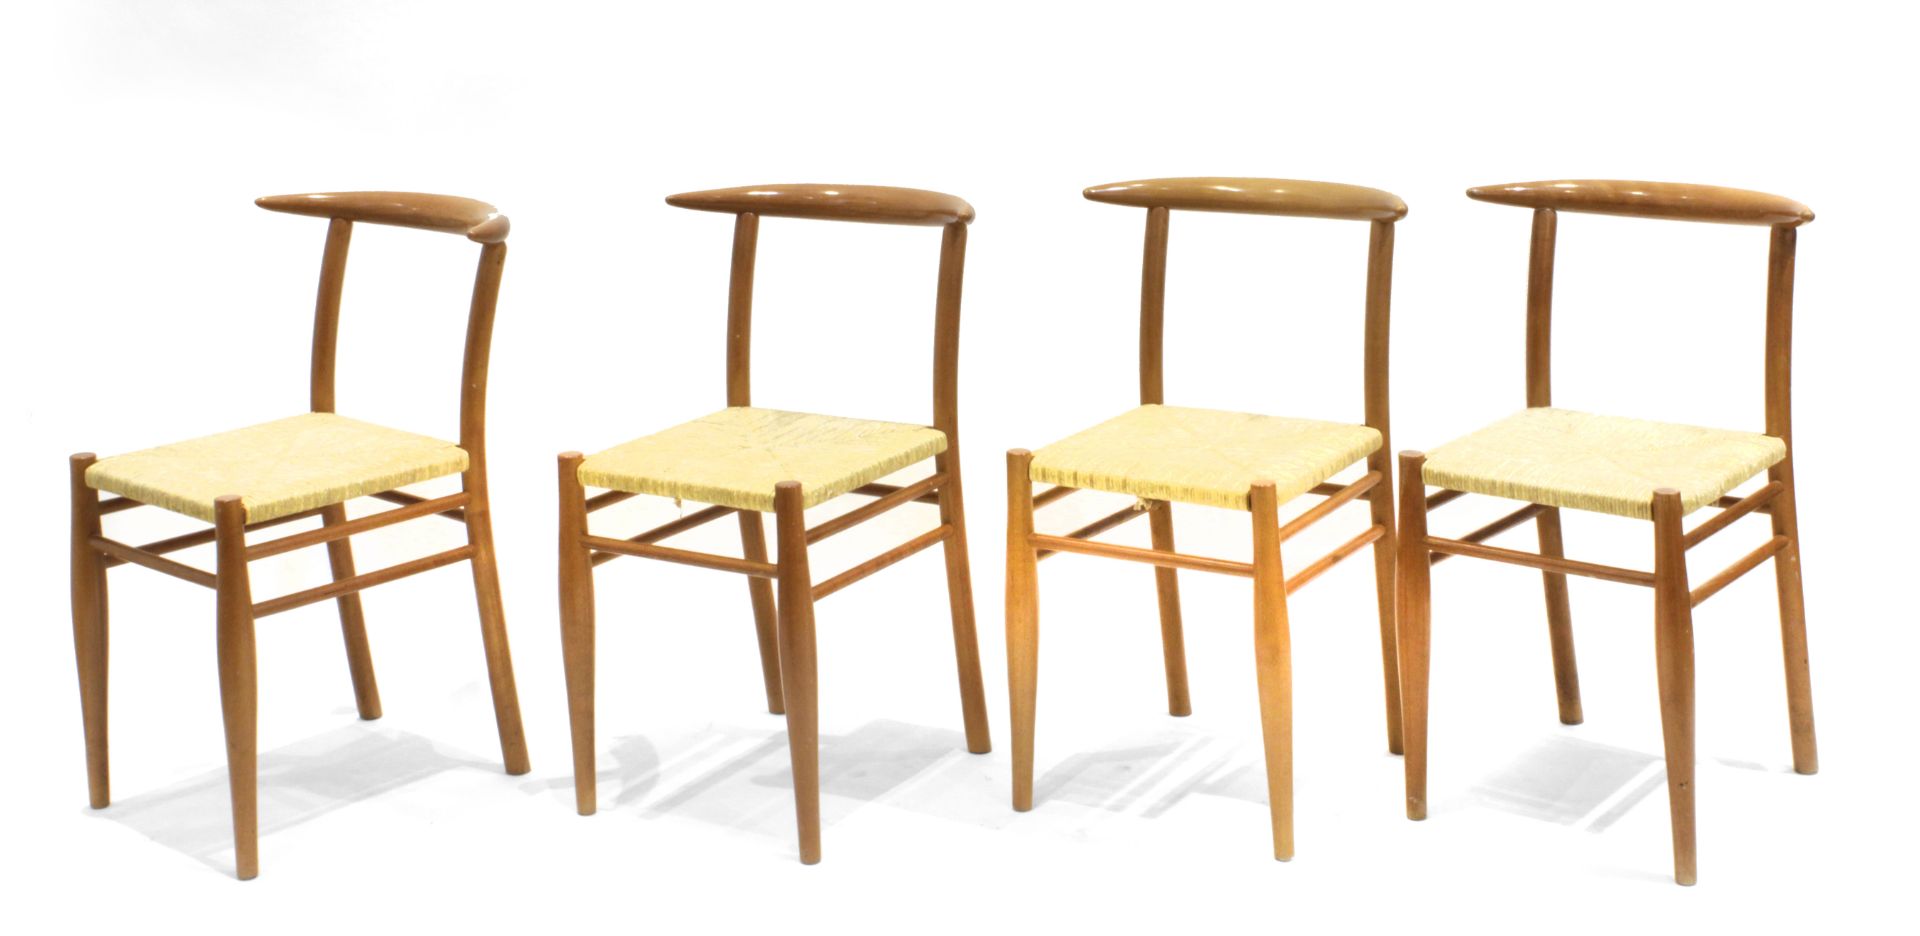 Philippe Starck for Driade circa 1980-1989. A set of eight "Bullhorn Aleph" chairs